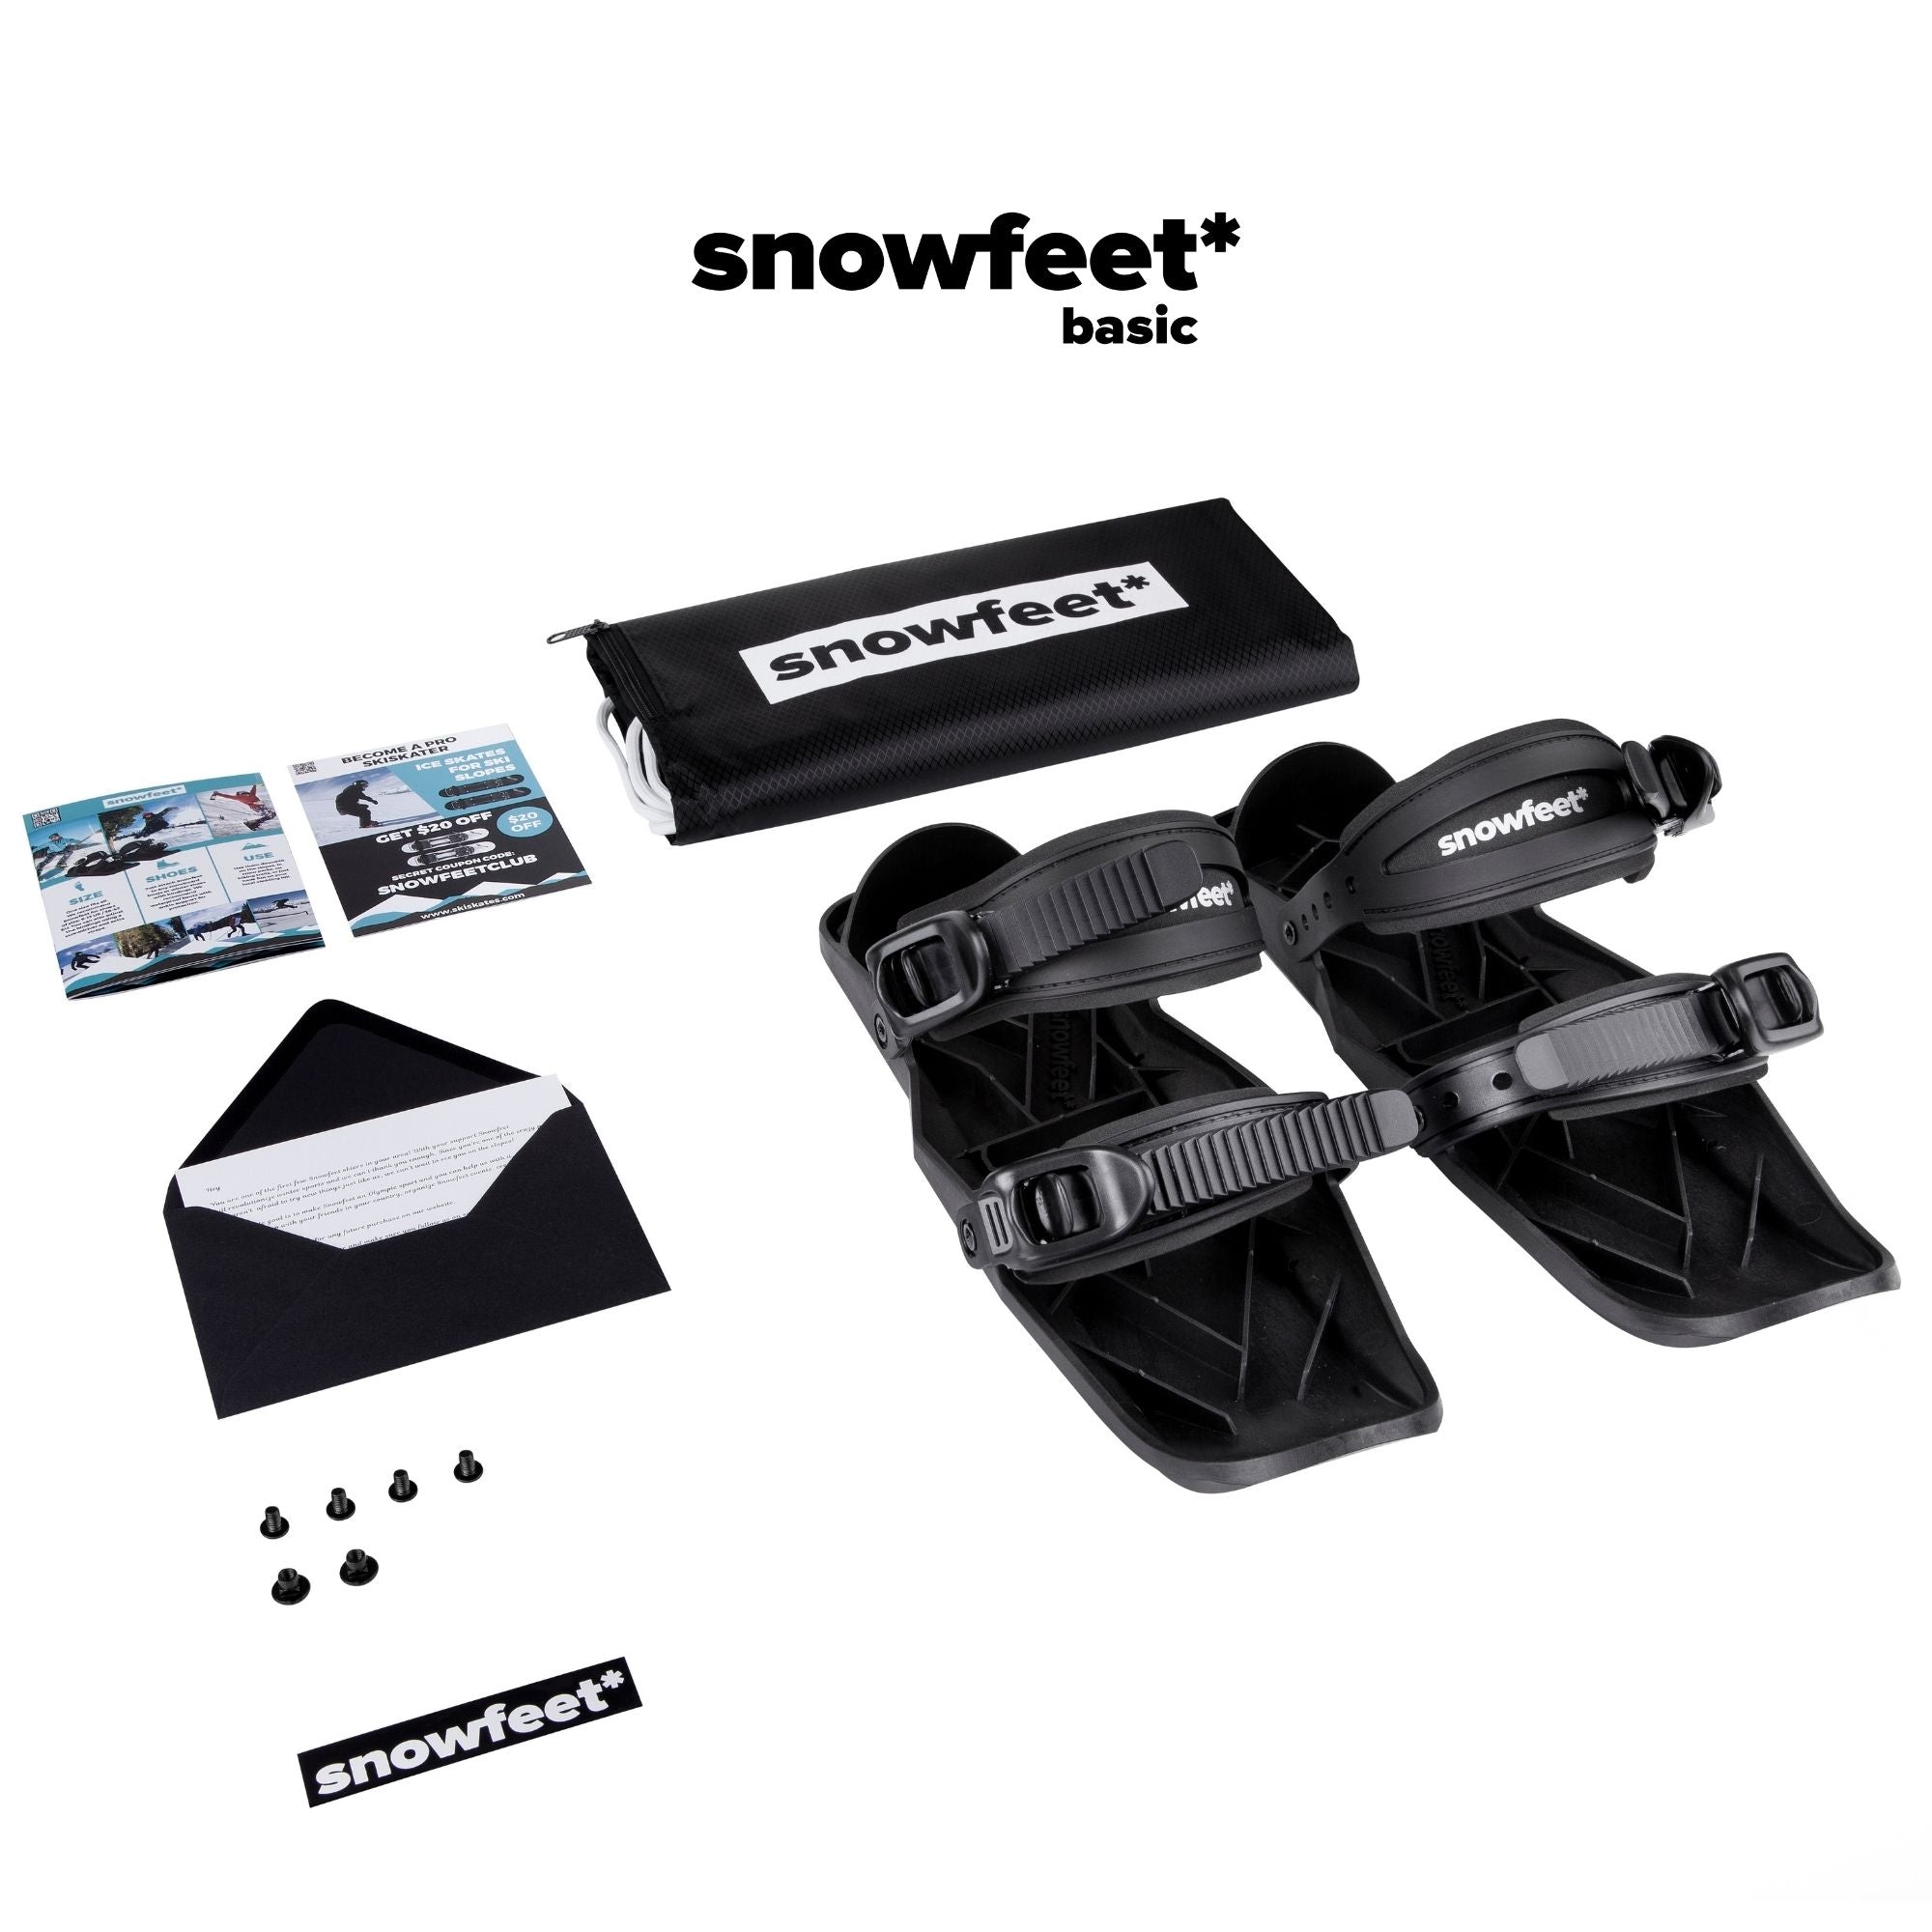 snowfee basic mini ski skates for snow package